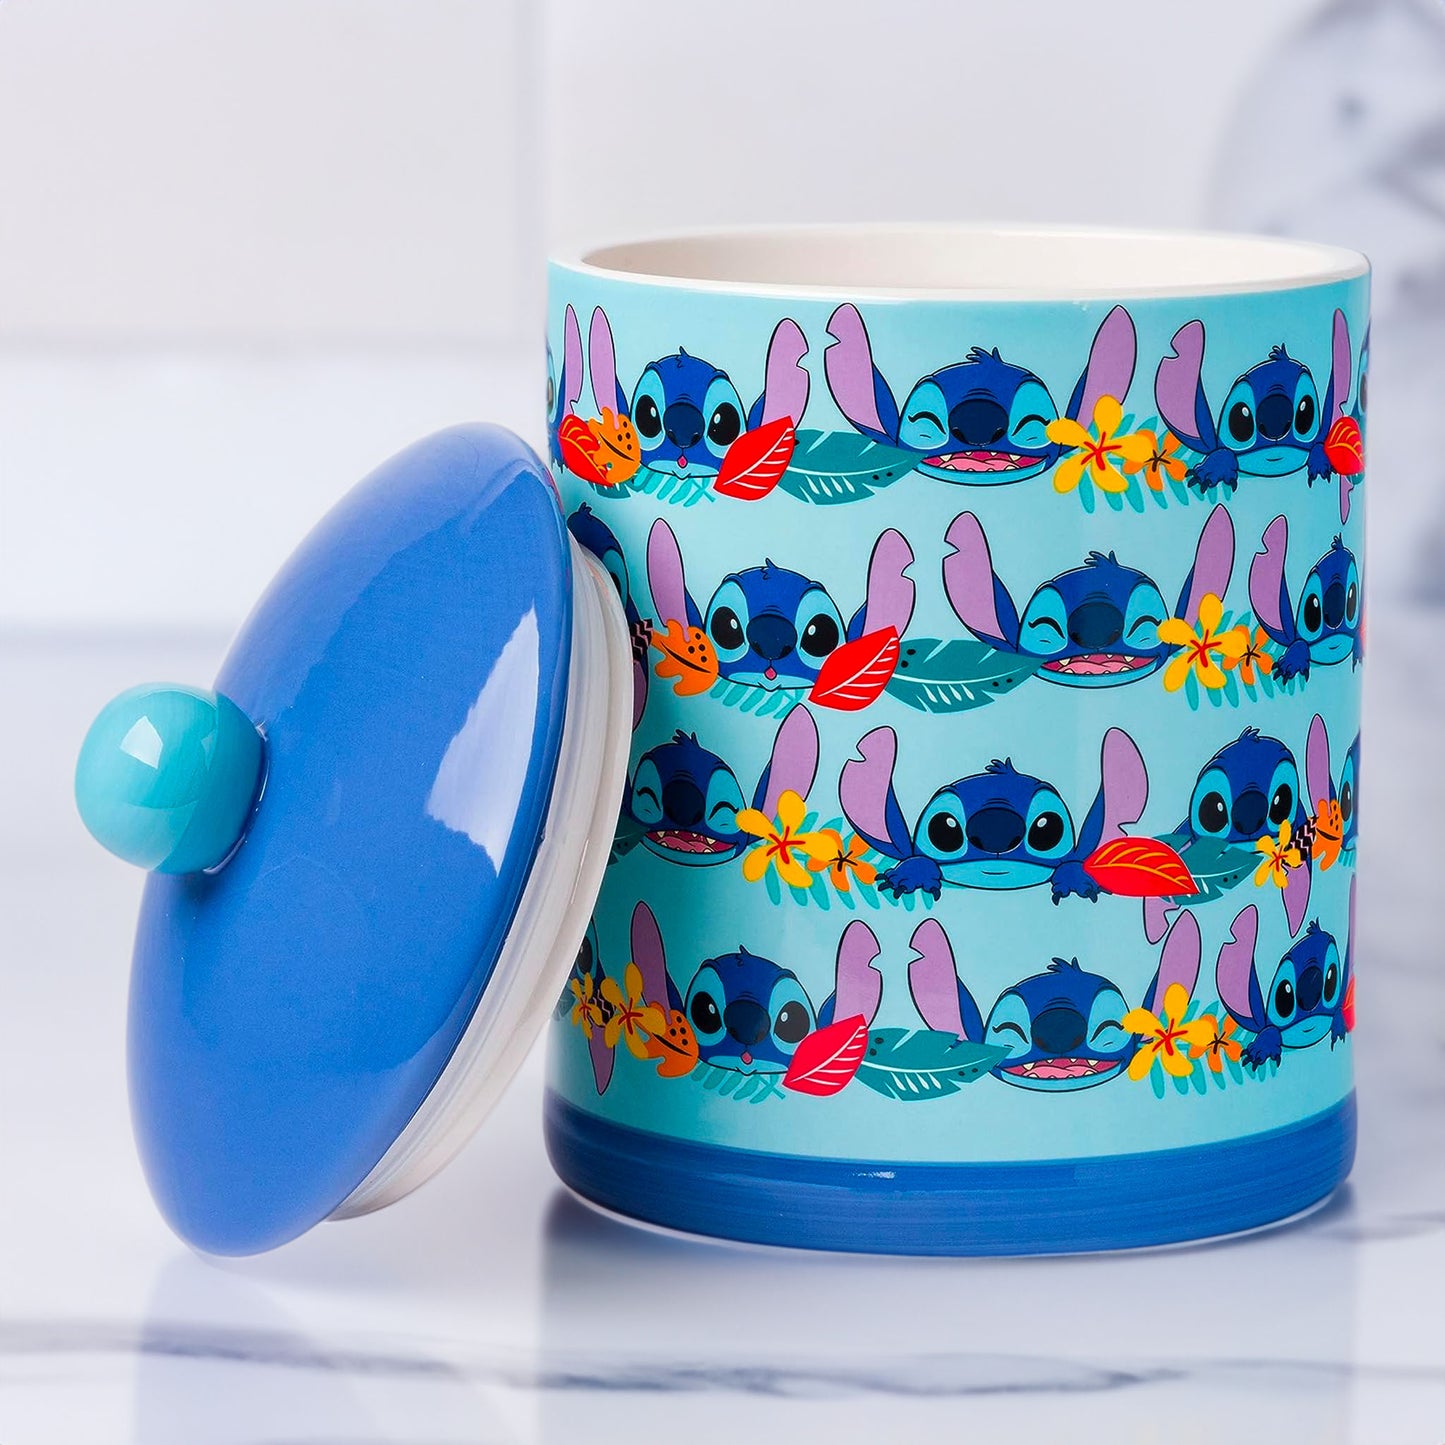 Lilo and Stitch (Disney) Ceramic Cookie Jar